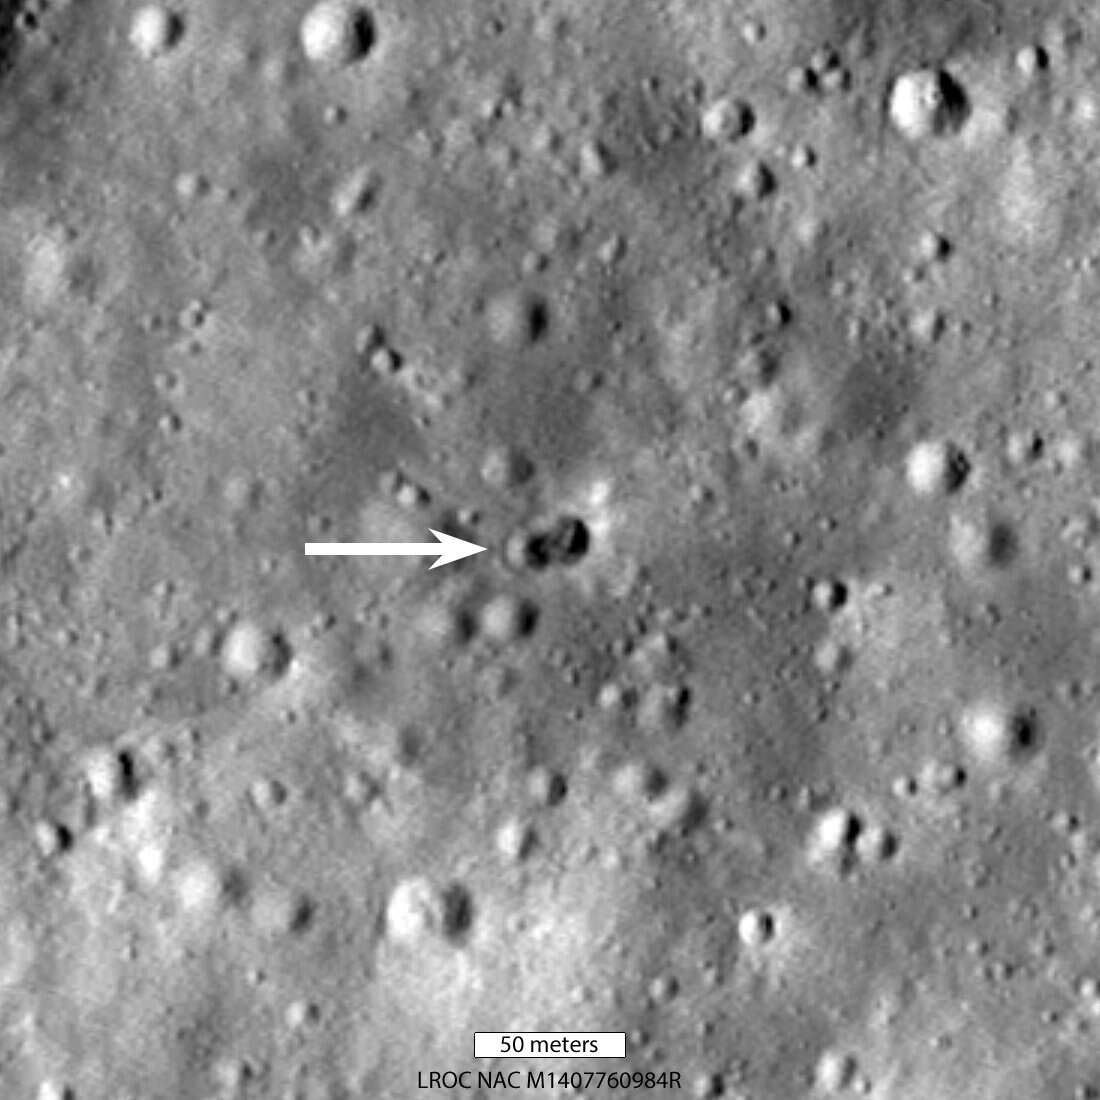 NASA Lunar Reconnaissance Orbiter finds rocket impact site on the Moon